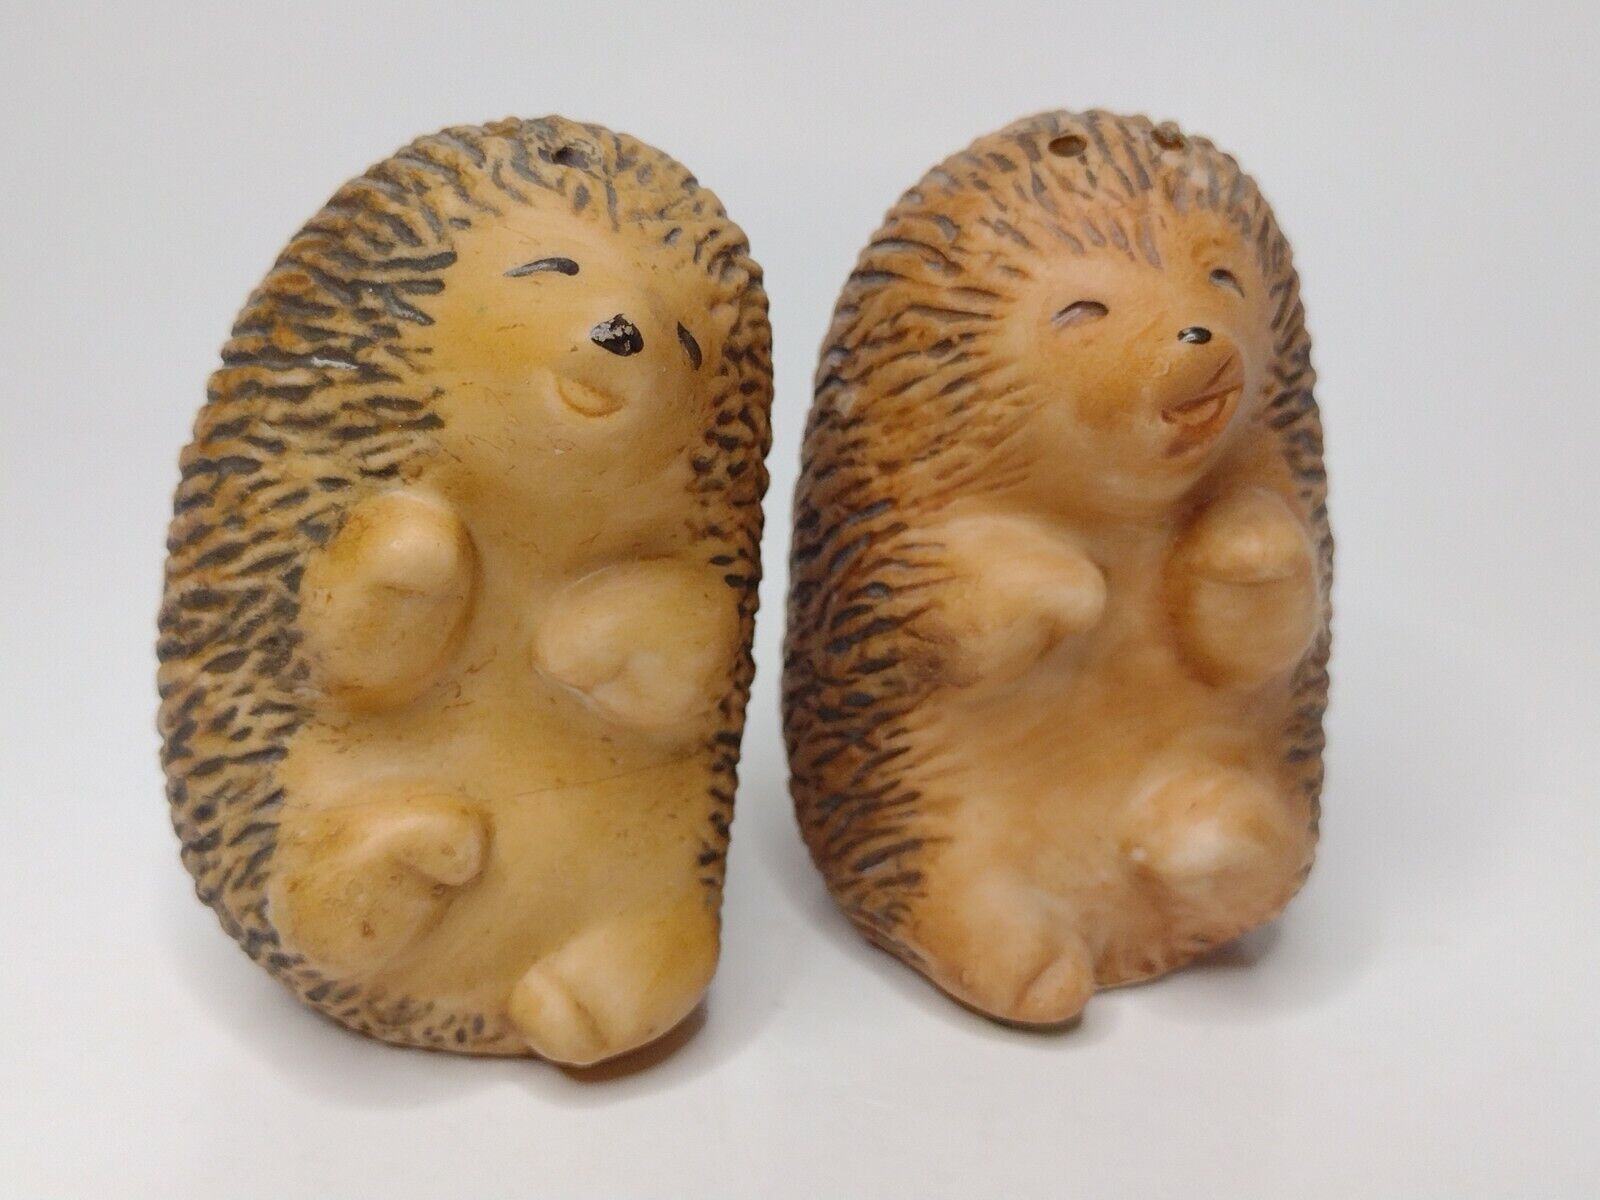 Hedgehog Shaped Salt & Pepper Shakers - Made In Korea 